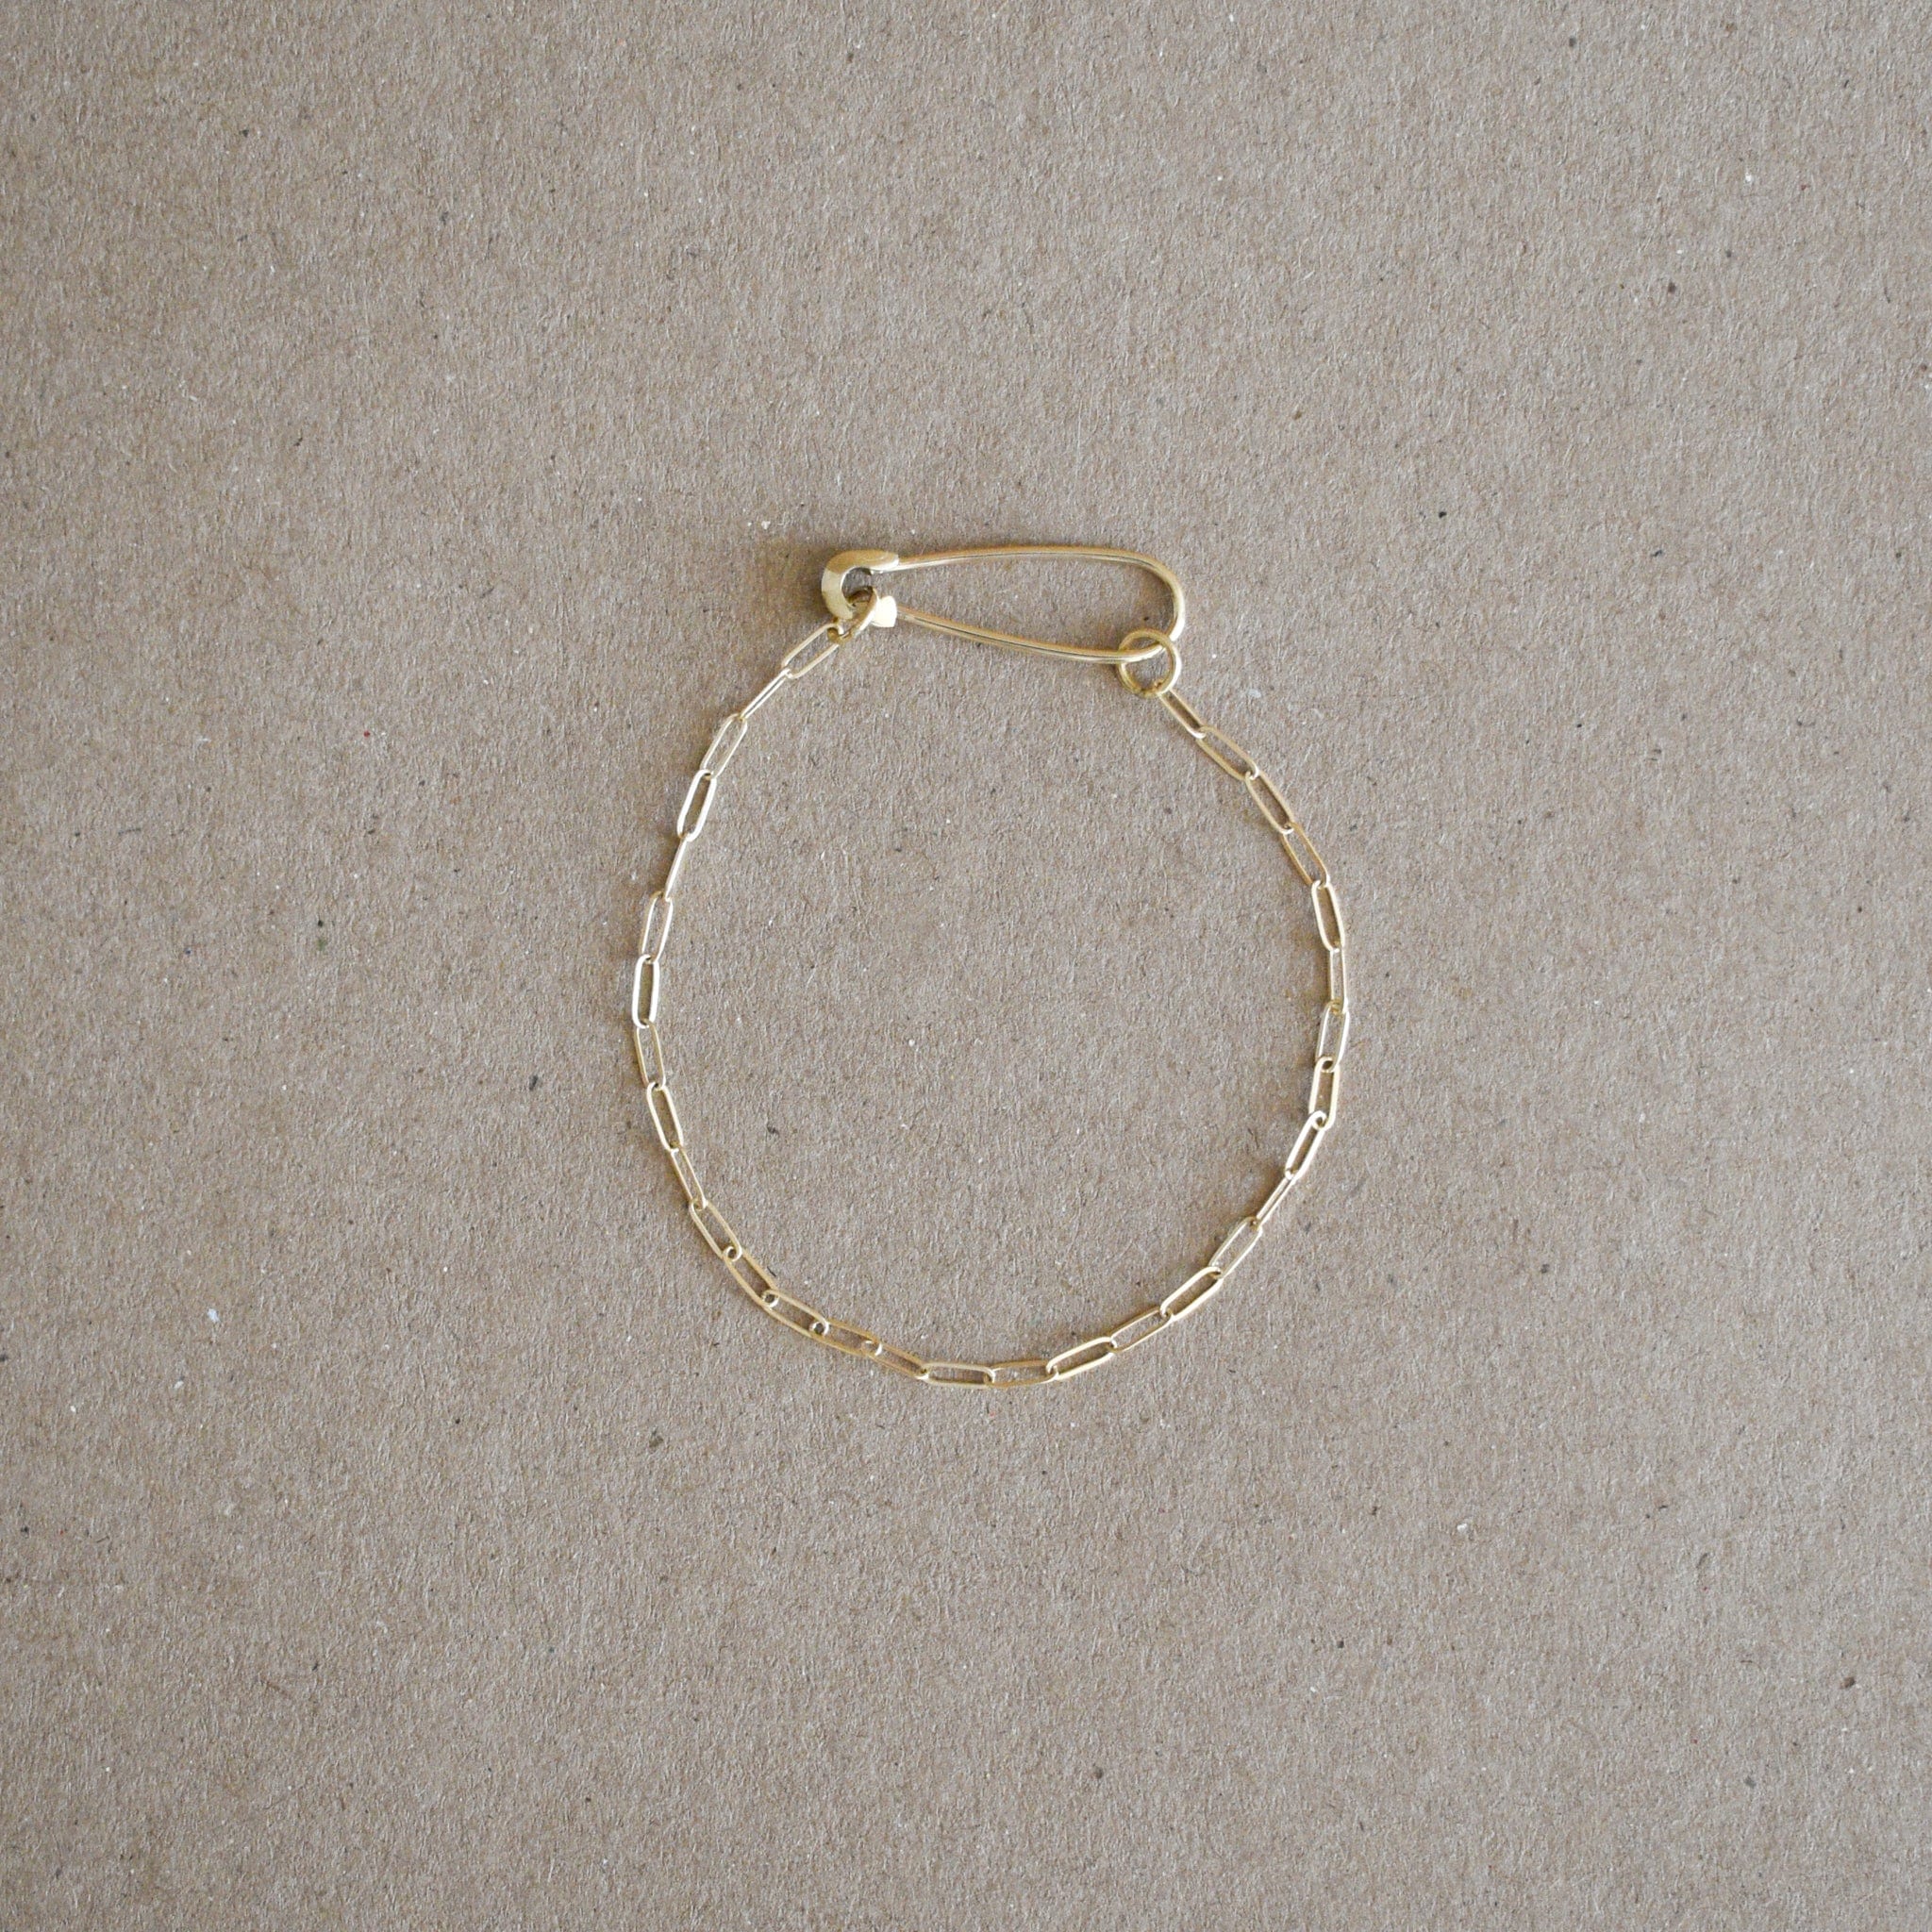 Hortense Jewelry Jewelry 14K Gold Link Chain Safety Pin Bracelet by Hortense